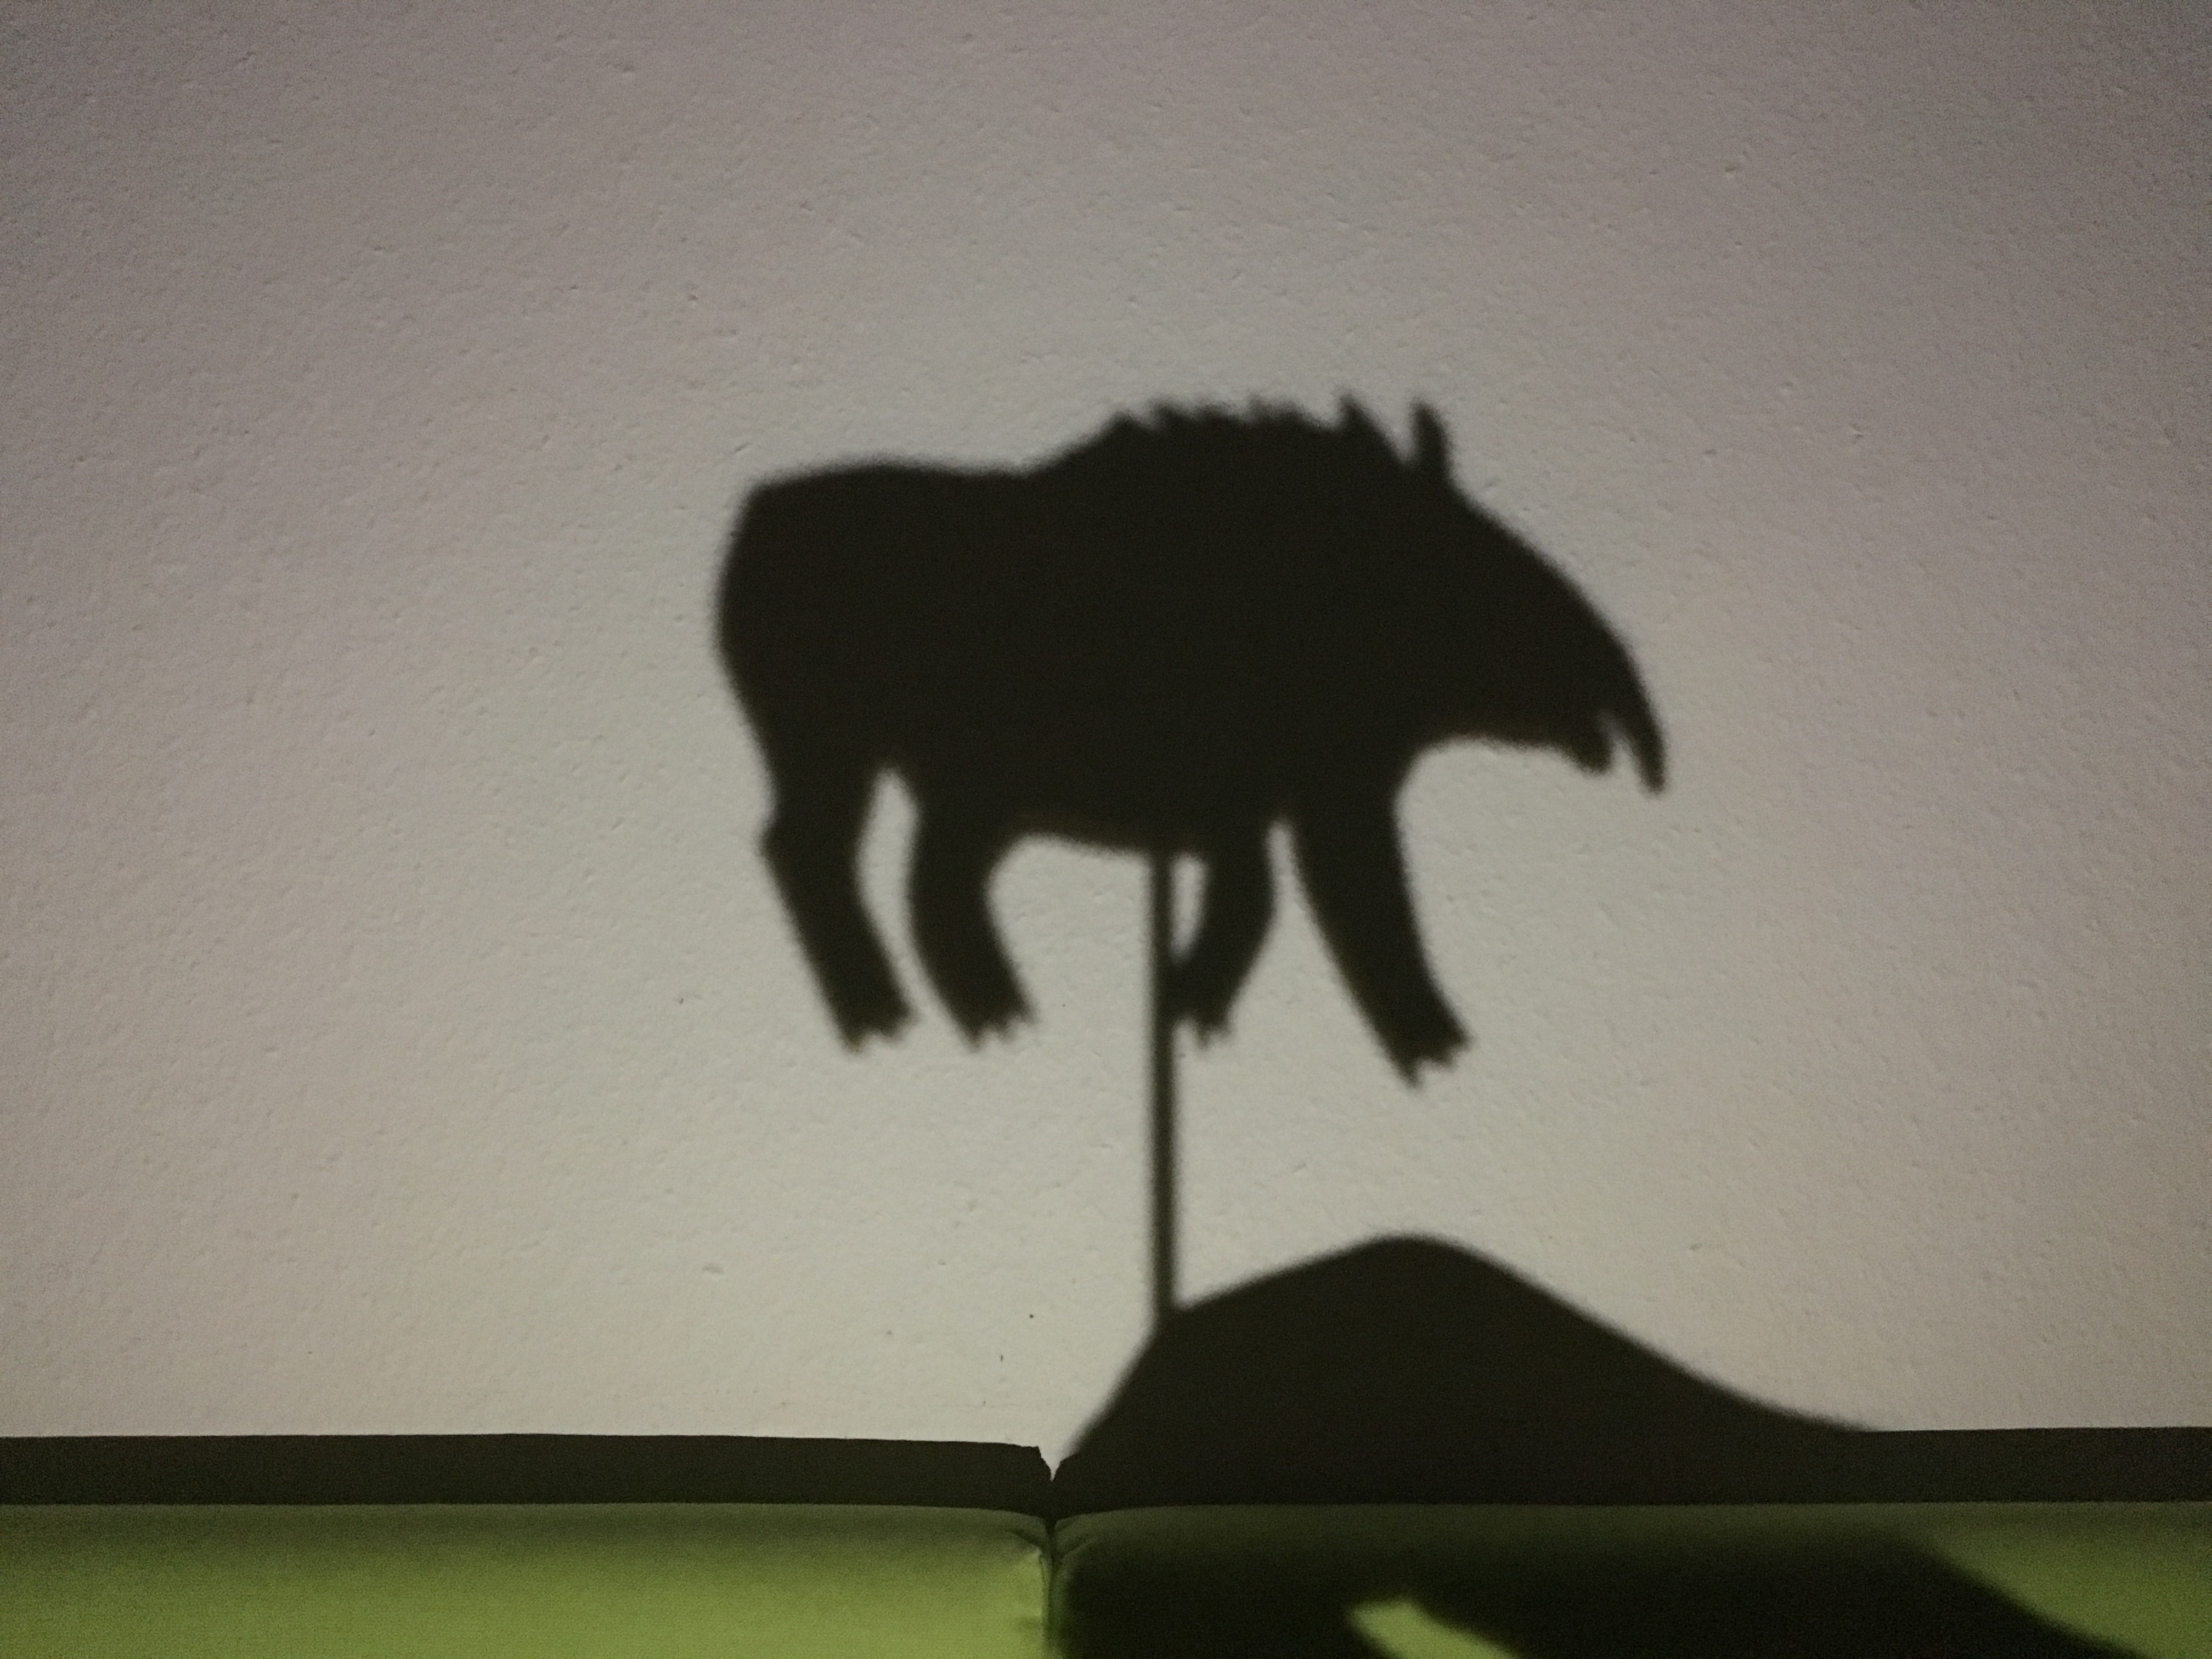 Shadow play - Tapir